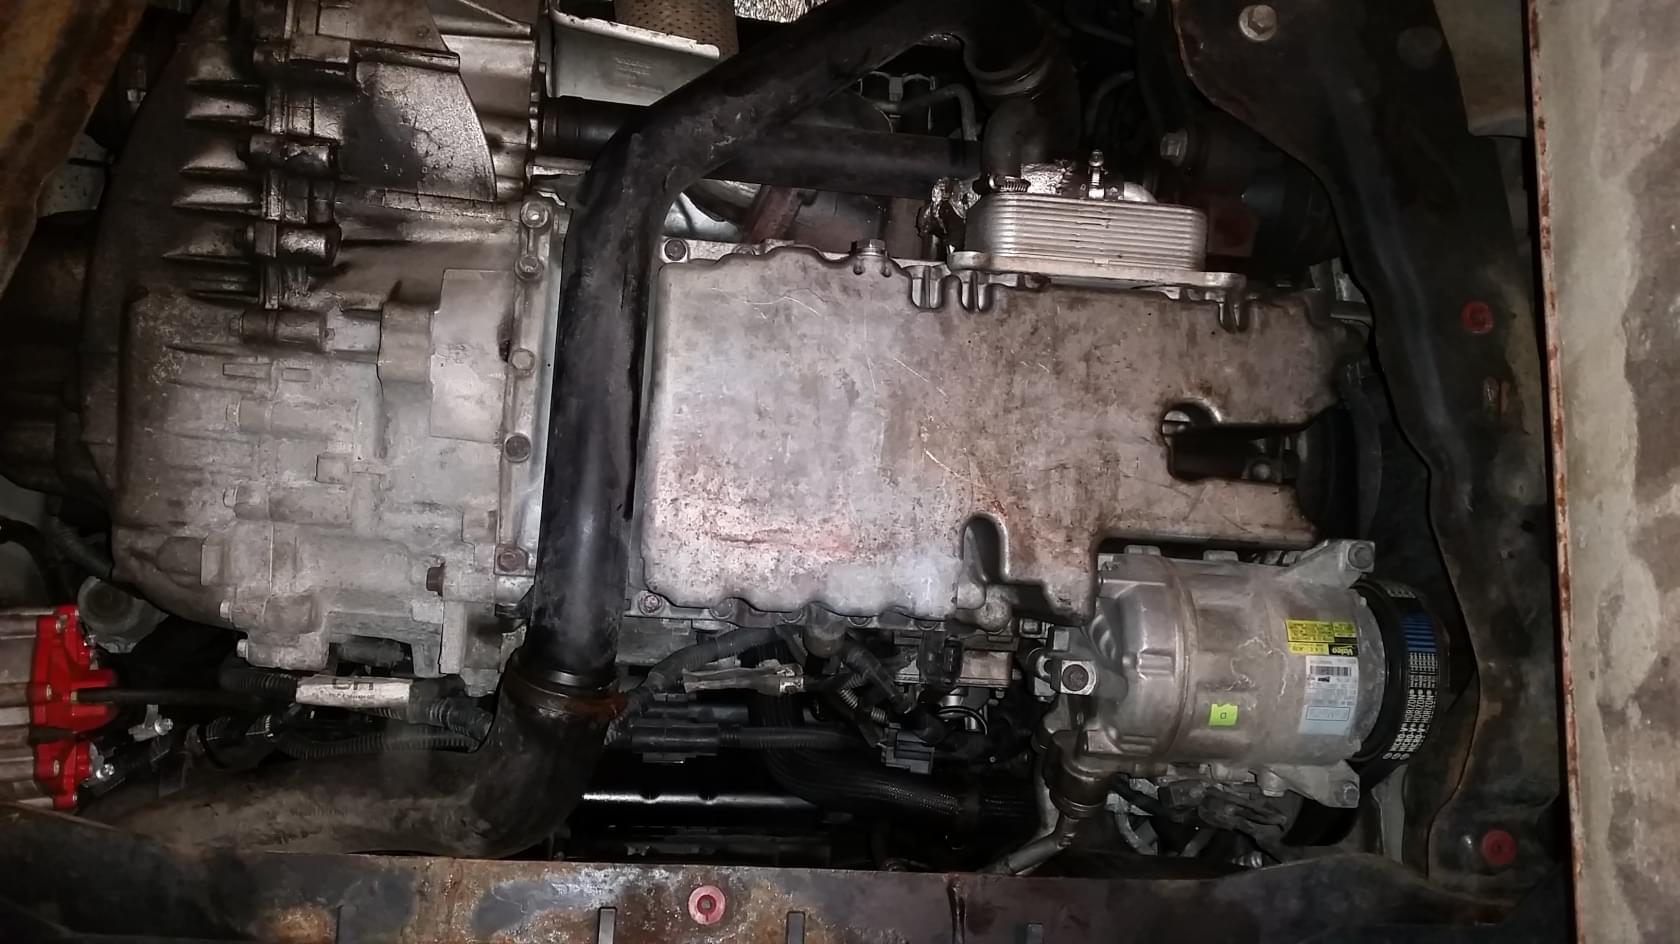 Check Engine 2.5T 220Ps Huba - Forum Volvo